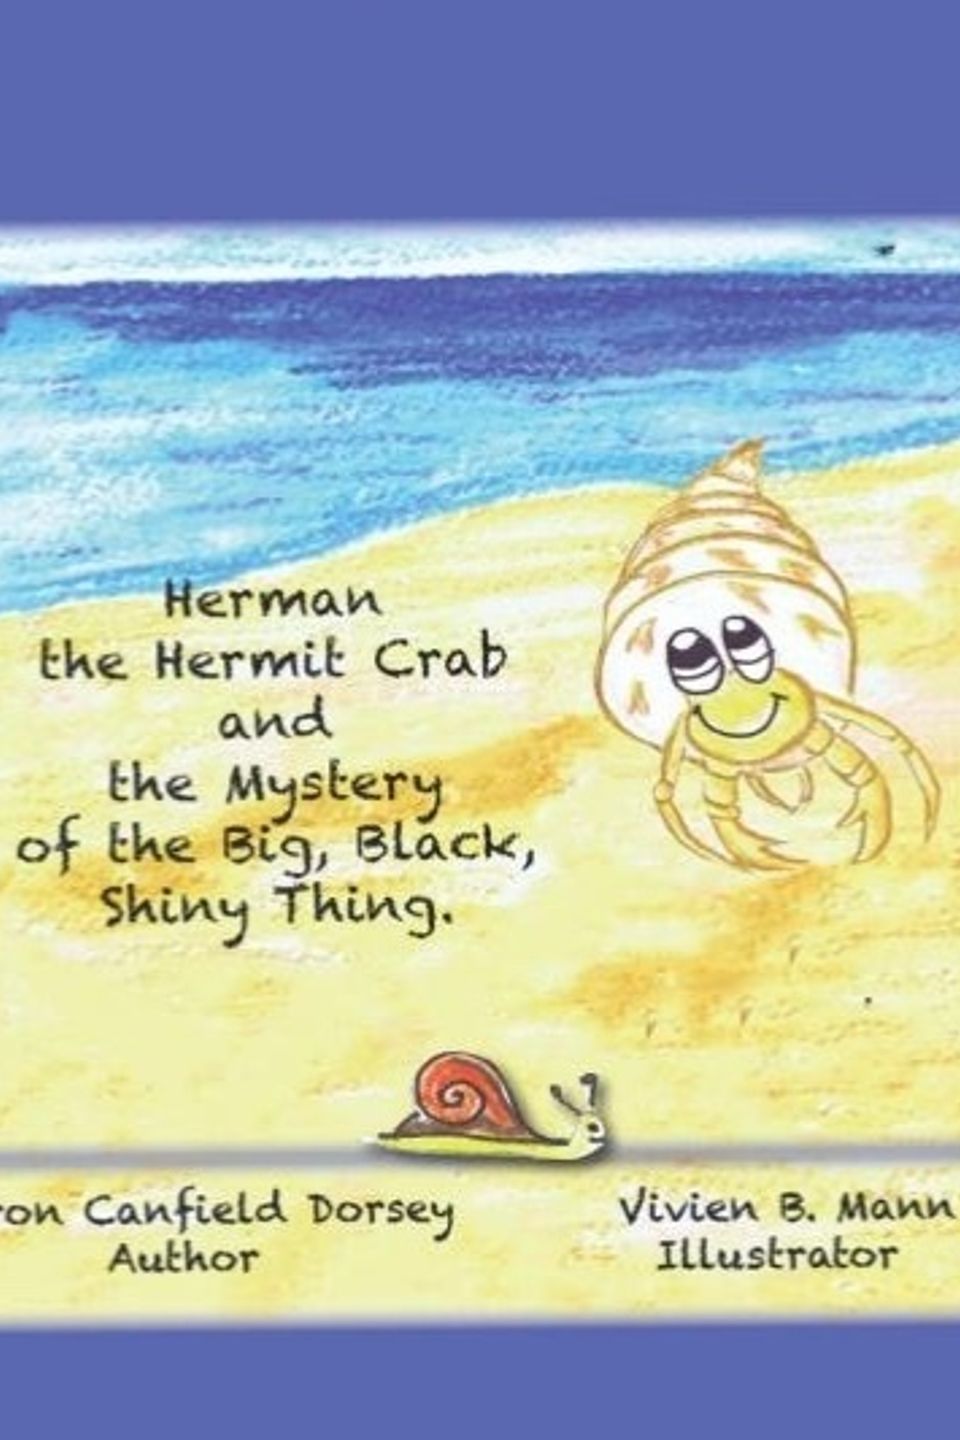 Herman the hermit crab20171019 21244 p0ayke